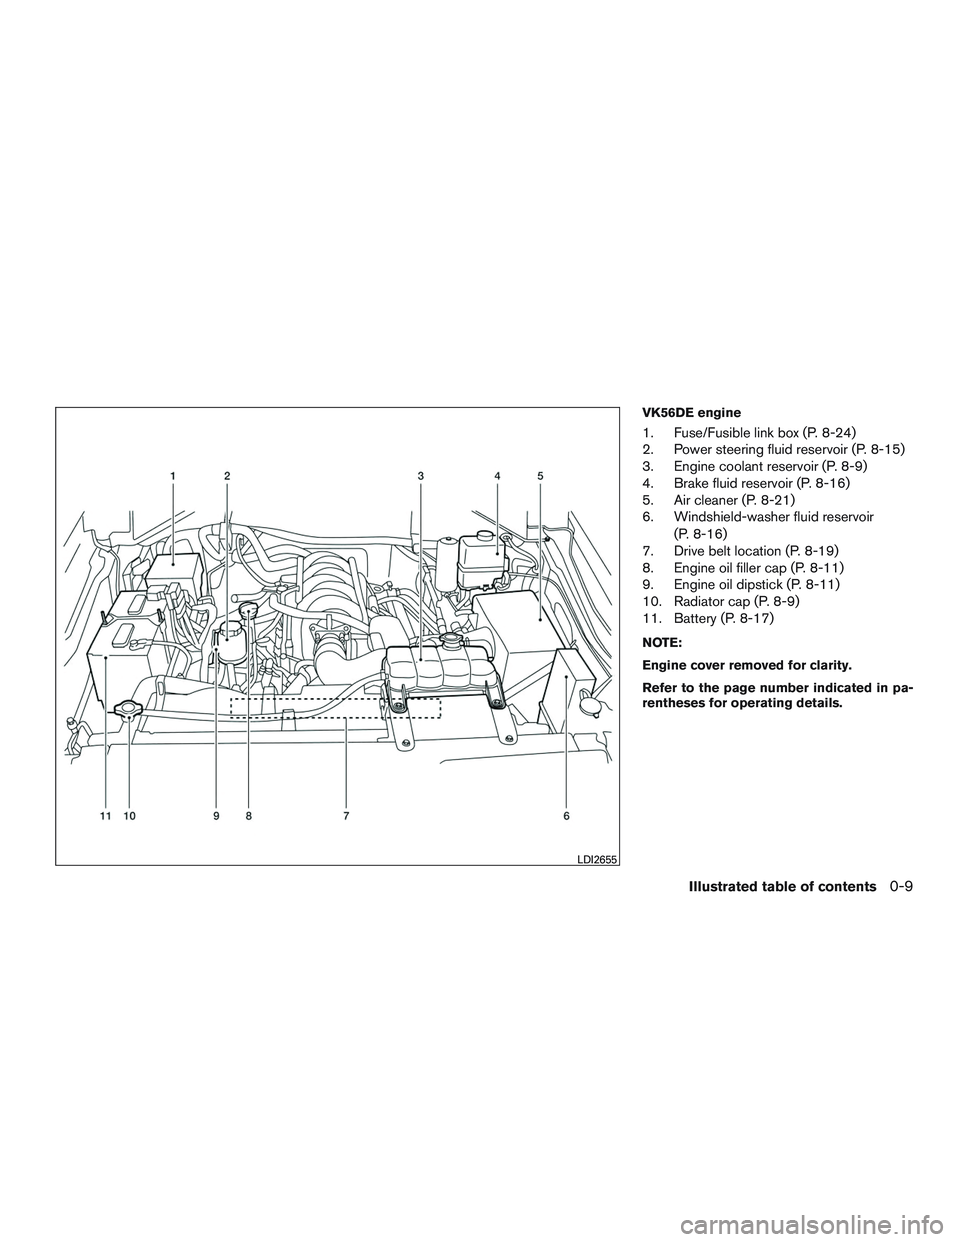 NISSAN NV PASSENGER VAN 2016  Owners Manual VK56DE engine
1. Fuse/Fusible link box (P. 8-24)
2. Power steering fluid reservoir (P. 8-15)
3. Engine coolant reservoir (P. 8-9)
4. Brake fluid reservoir (P. 8-16)
5. Air cleaner (P. 8-21)
6. Windshi